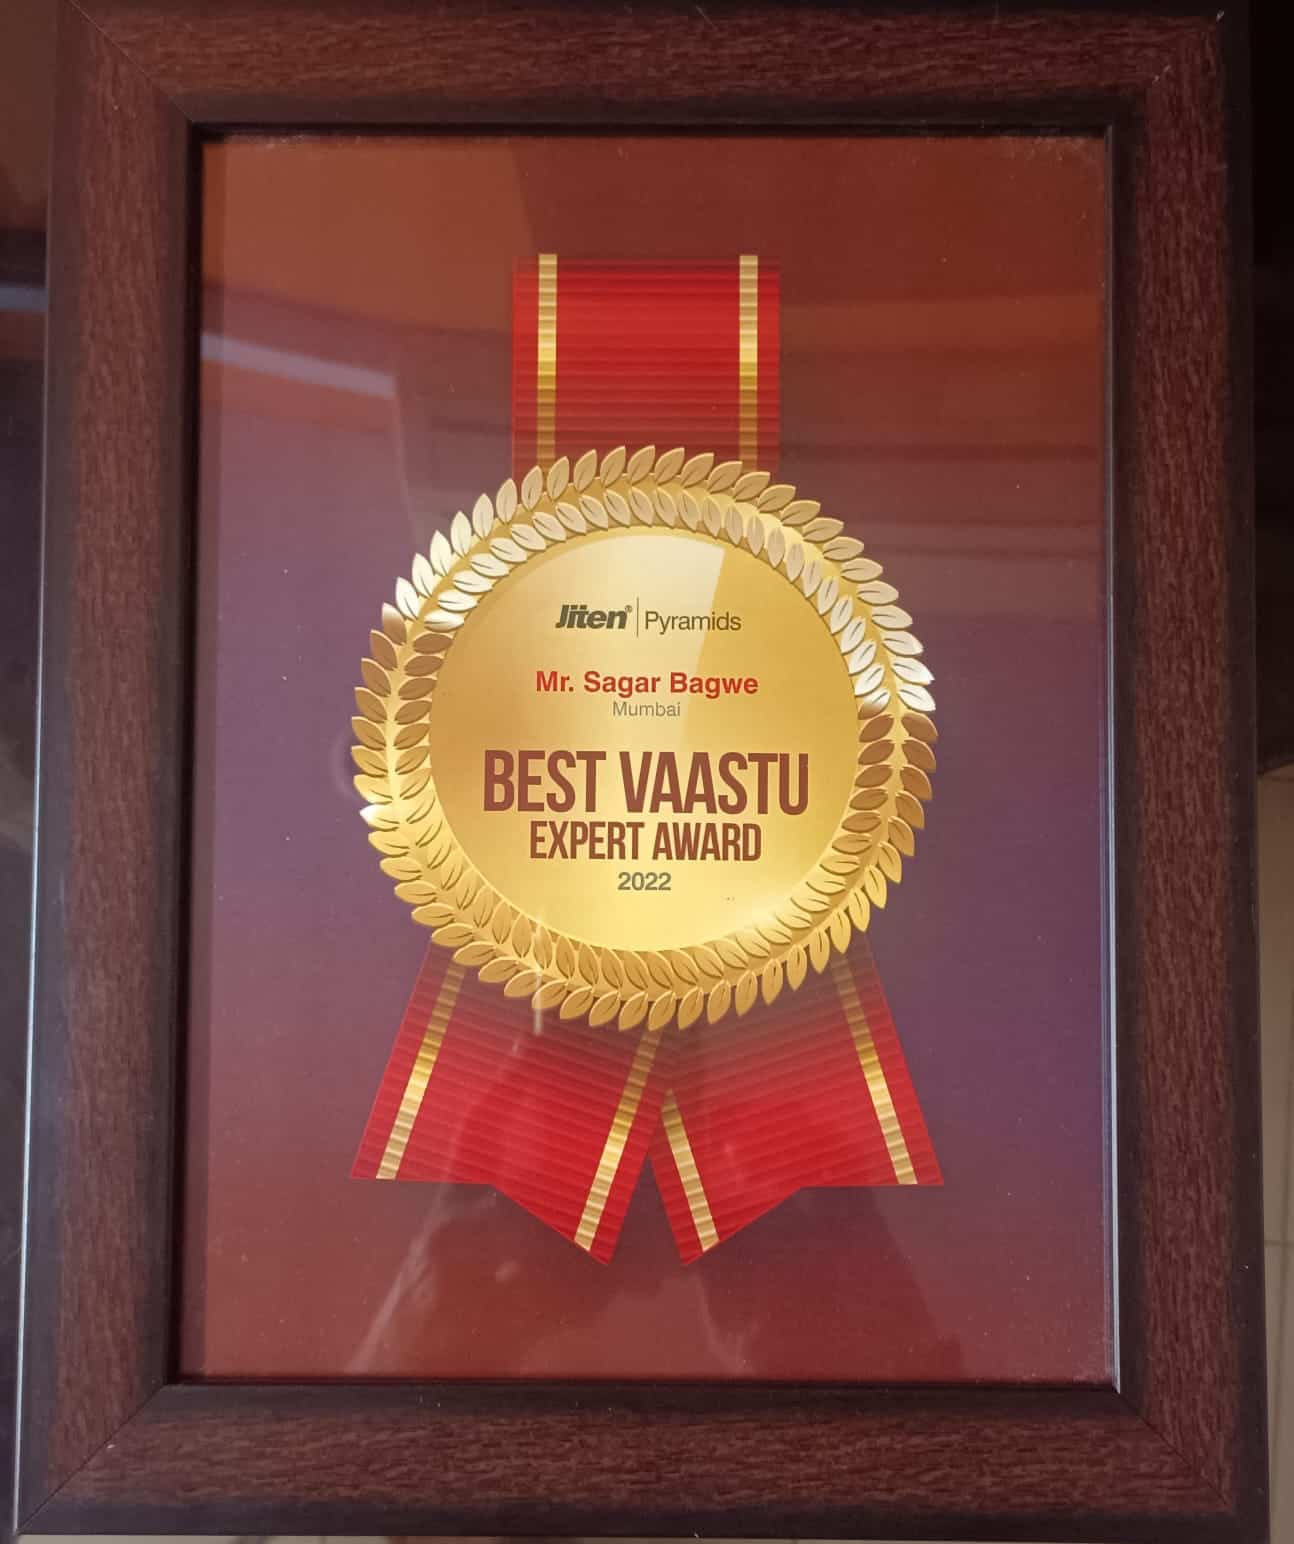 Jiten pyramid felicitated ''BEST VASTU EXPERT AWARD 2022.''